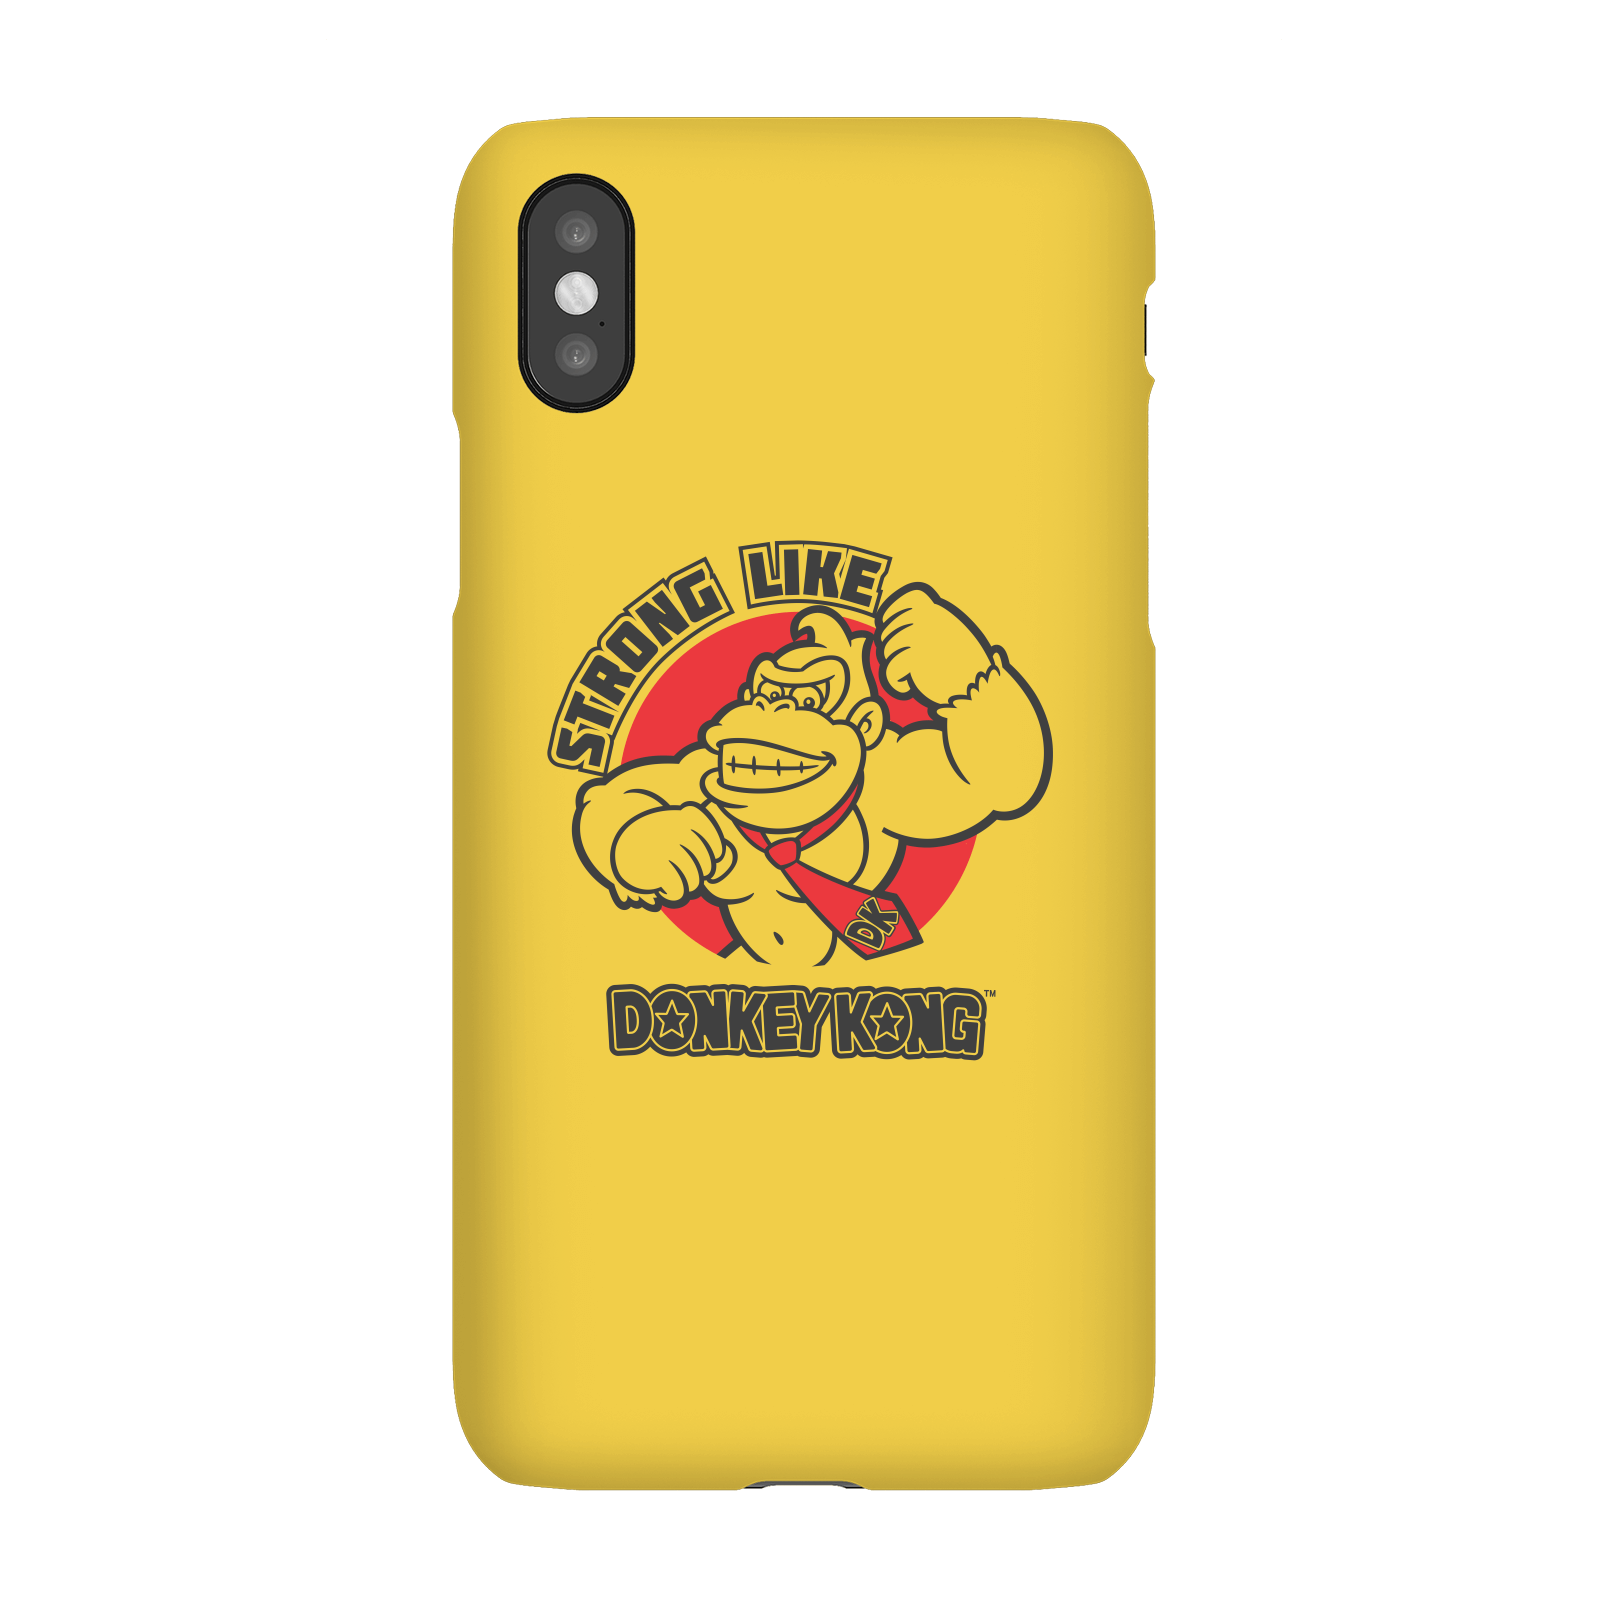 Nintendo Donkey Kong Strong Like Donkey Kong Phone Case - iPhone X - Snap Case - Gloss